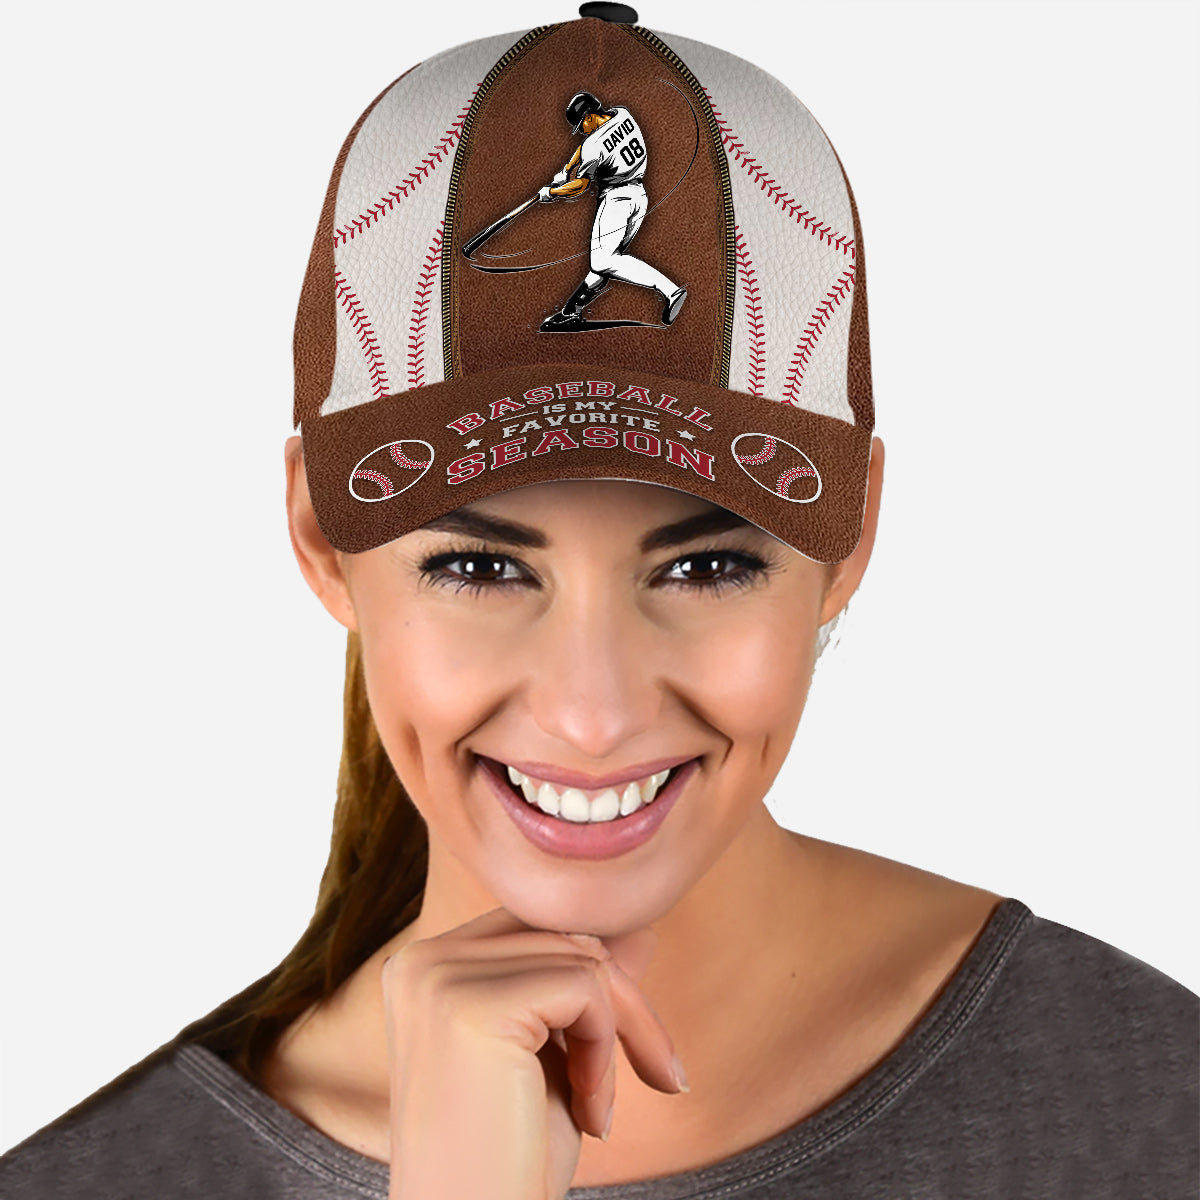 Baseball Is My Favorite Season - Personalized Baseball Classic Cap